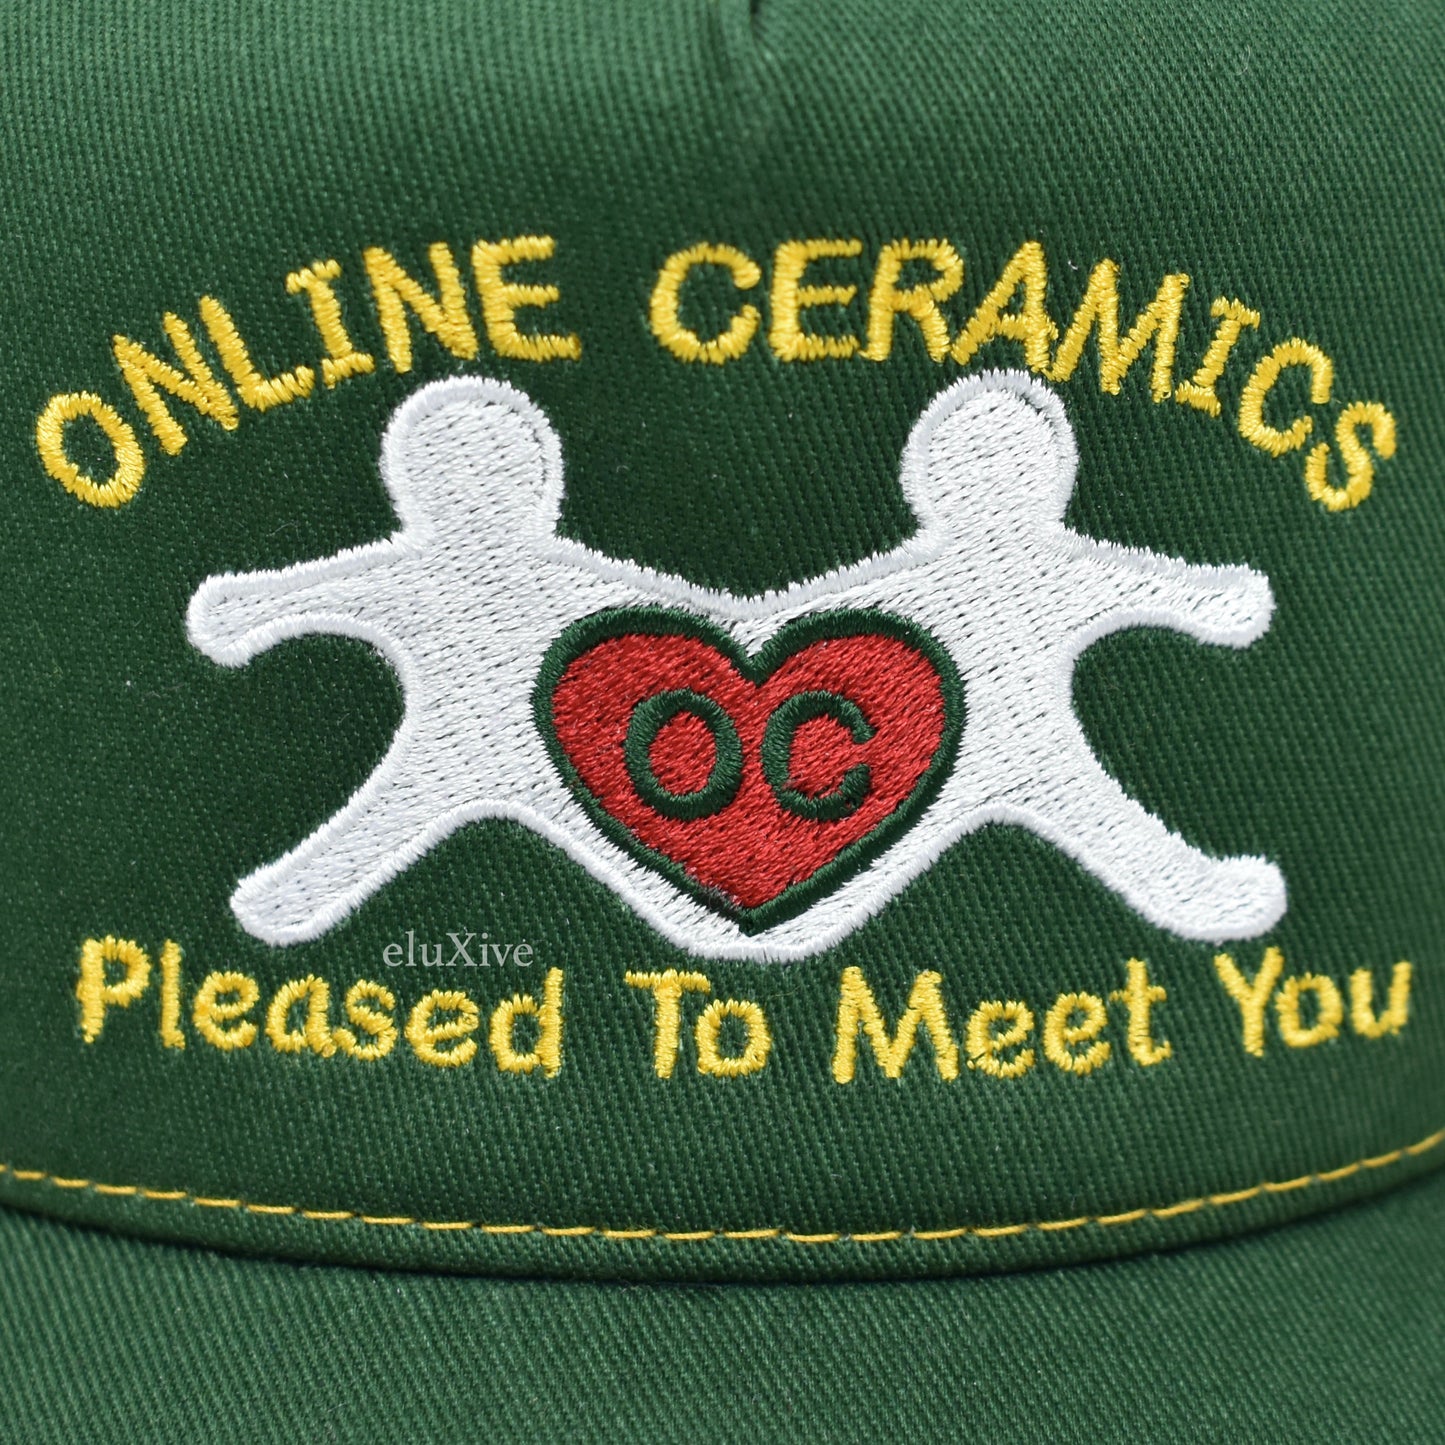 Online Ceramics - Pleased To Meet You 'Love' Hat (Dark Green)